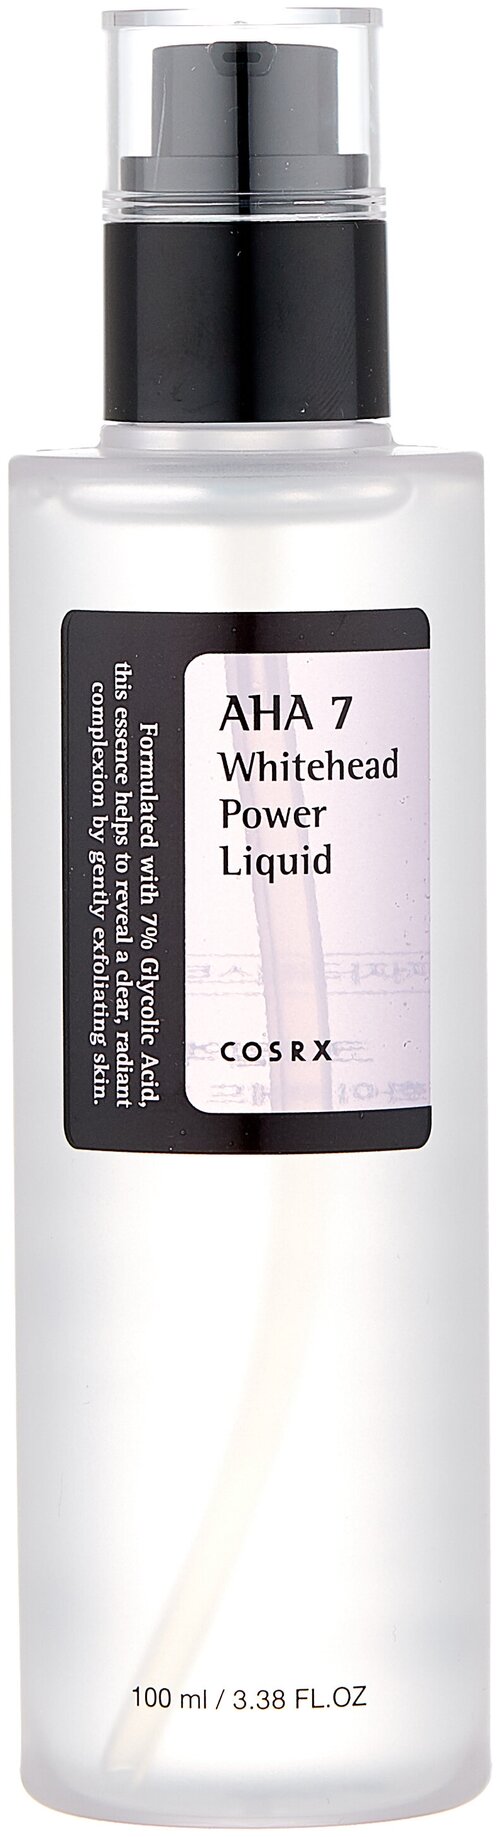 COSRX Сыворотка осветляющая для лица AHA 7 Whitehead Power Liquid, 100 мл